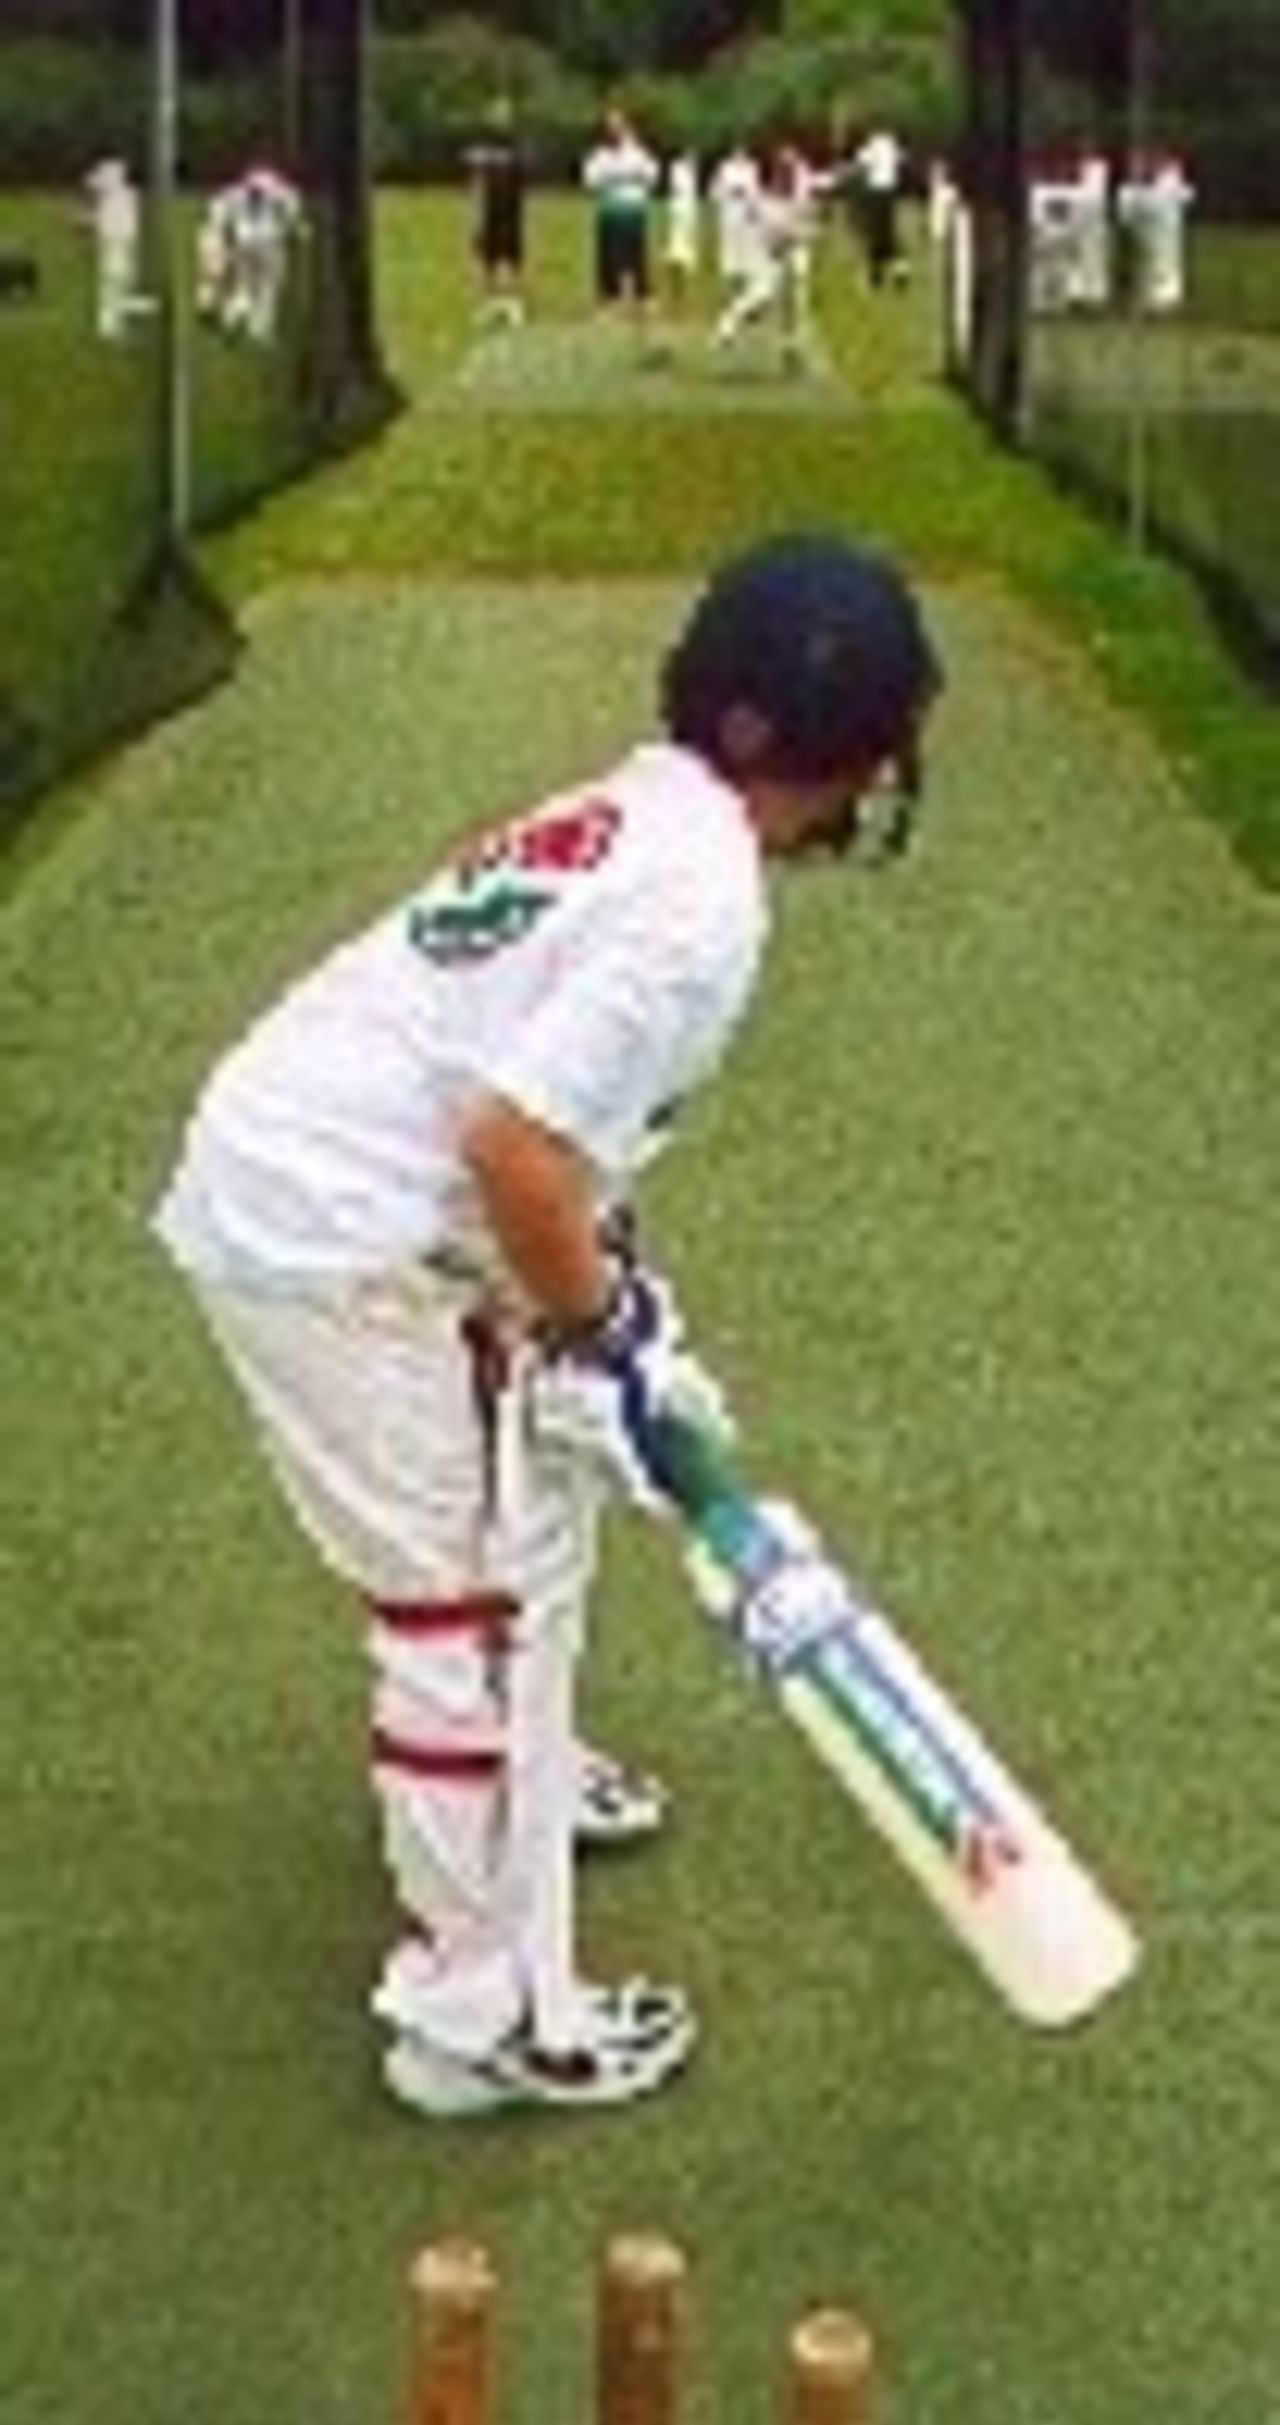 Cricket Day 2001 in Ireland